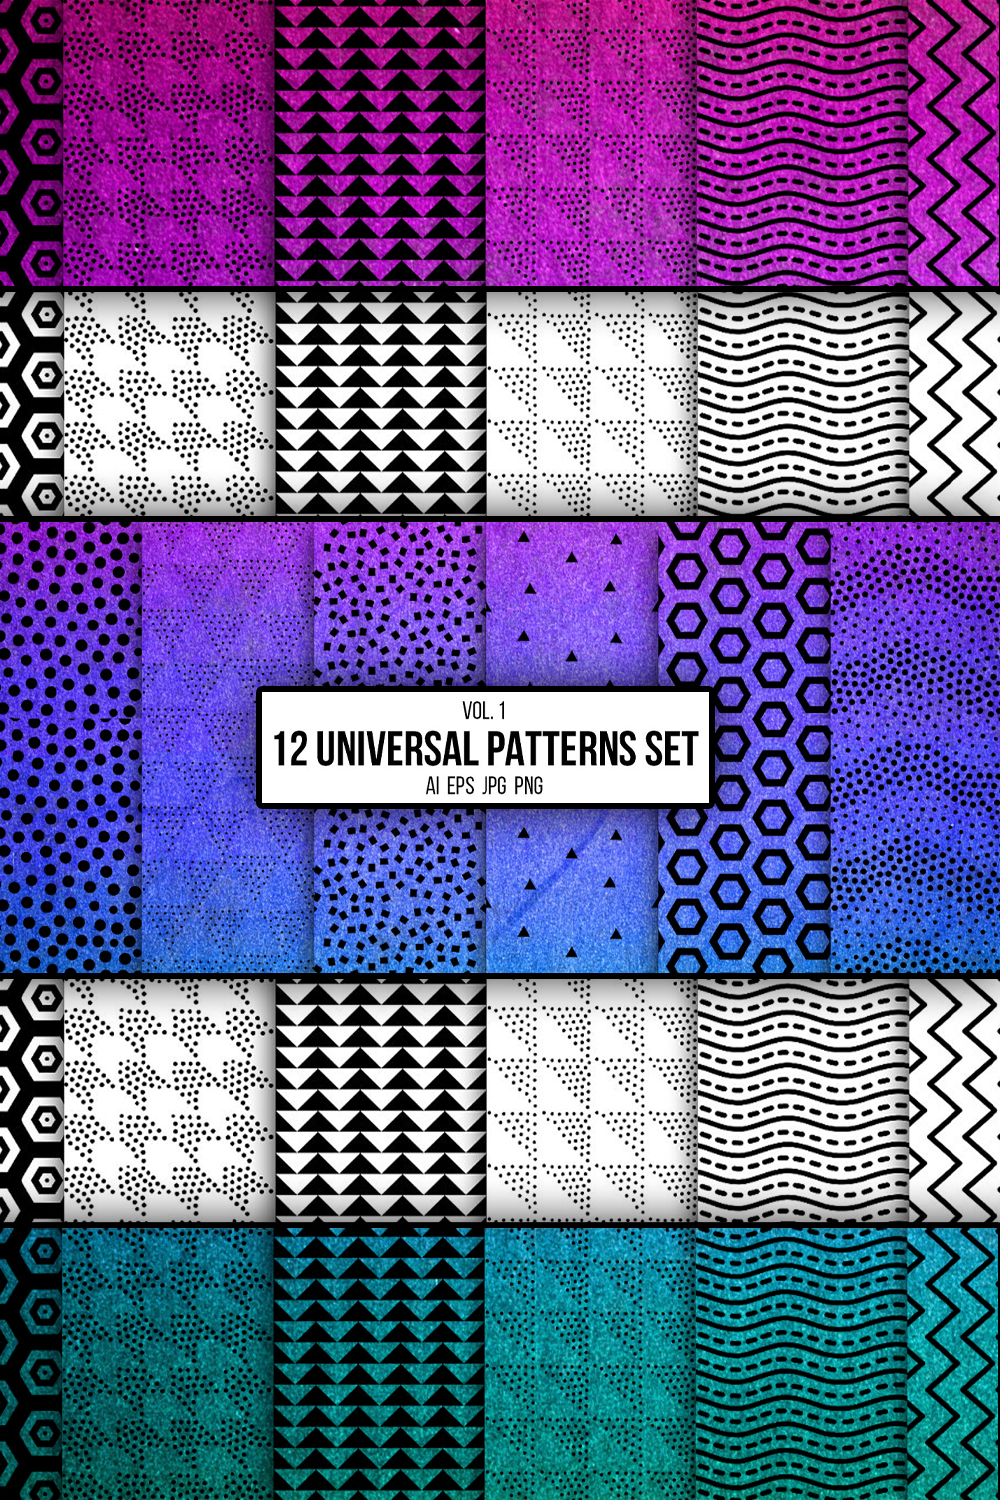 Universal patterns set of pinterest.